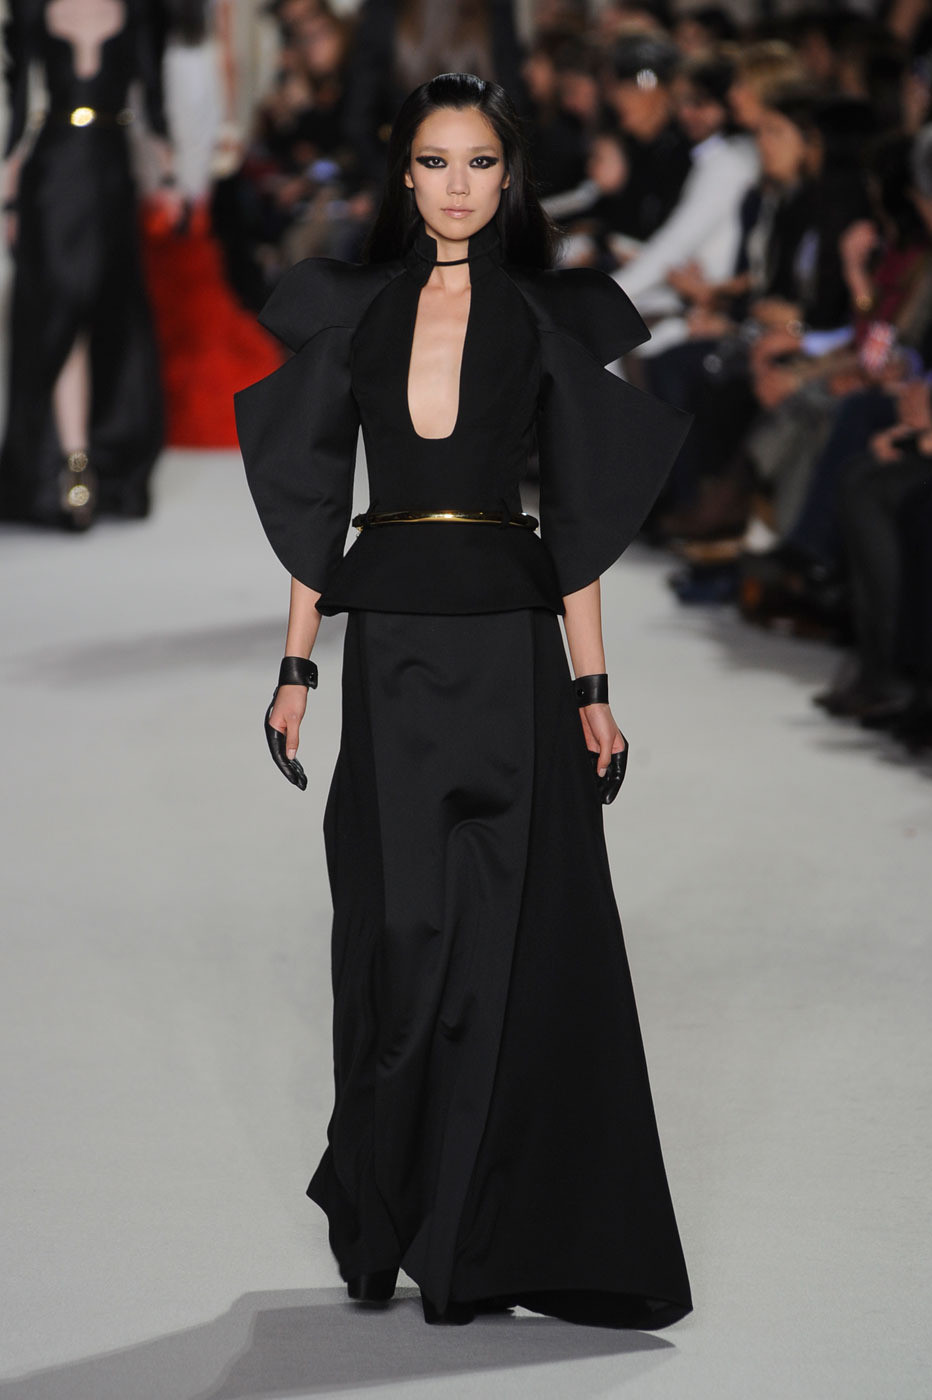 stephane rolland haute couture paris s/s 2012 | visual optimism ...